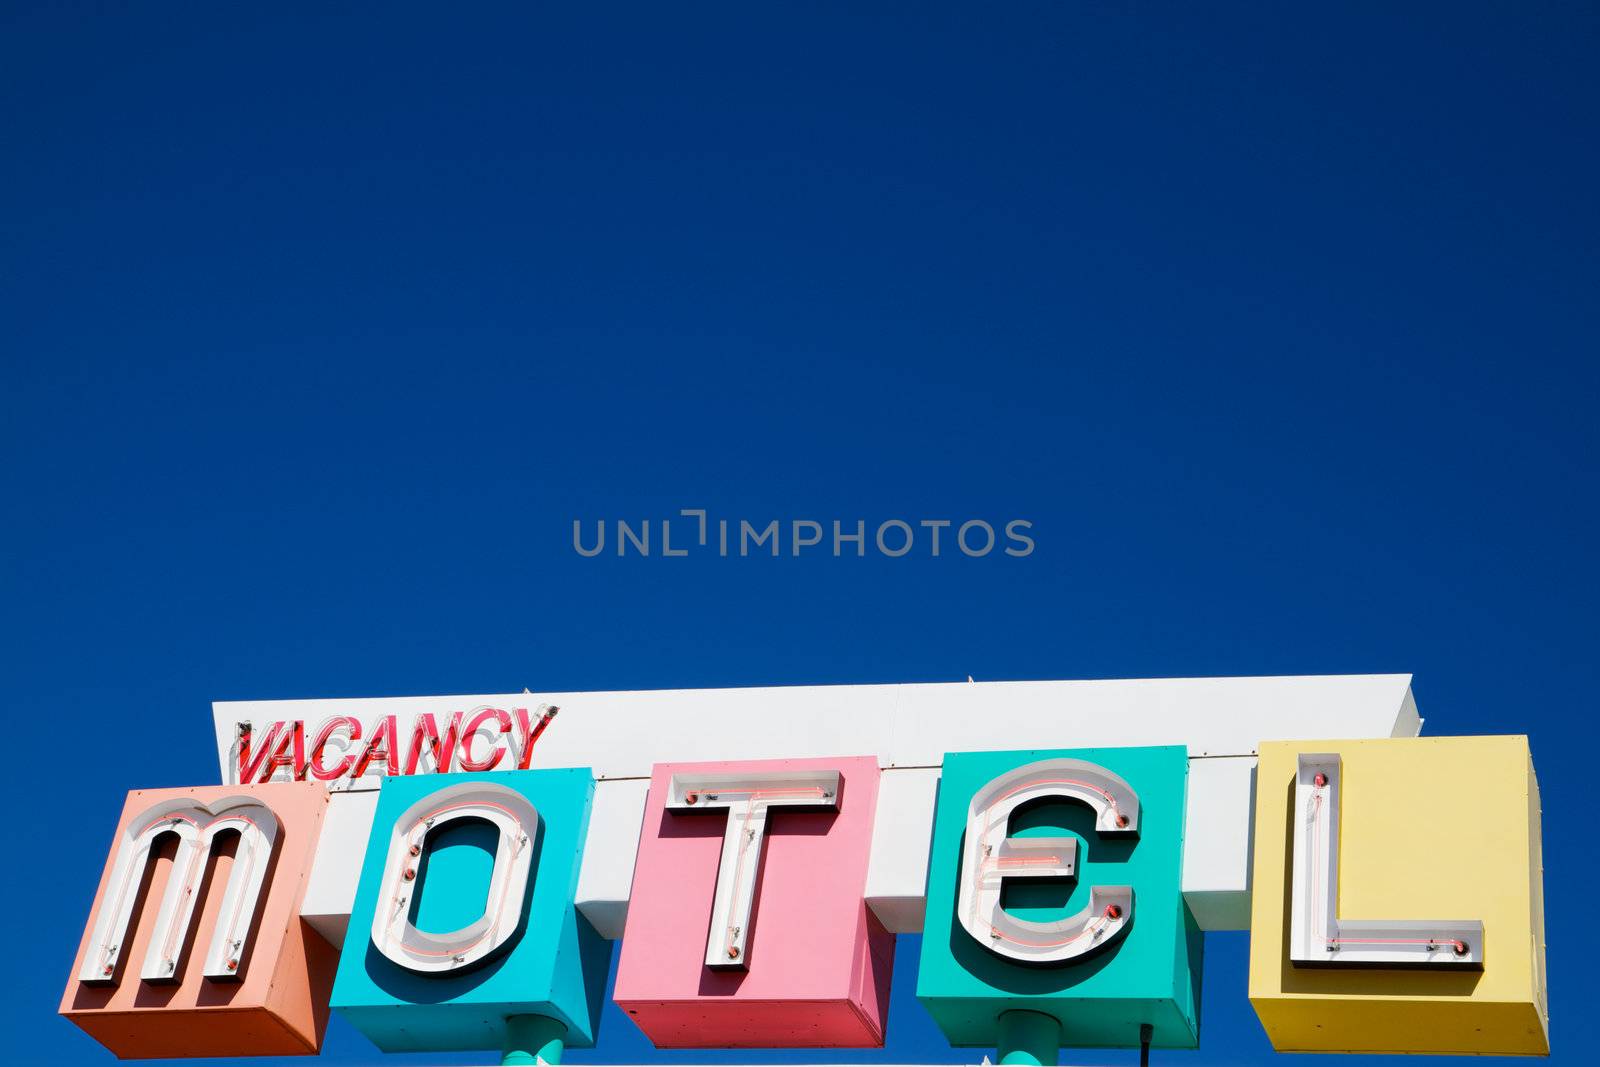 1950s Motel Sign by bobkeenan